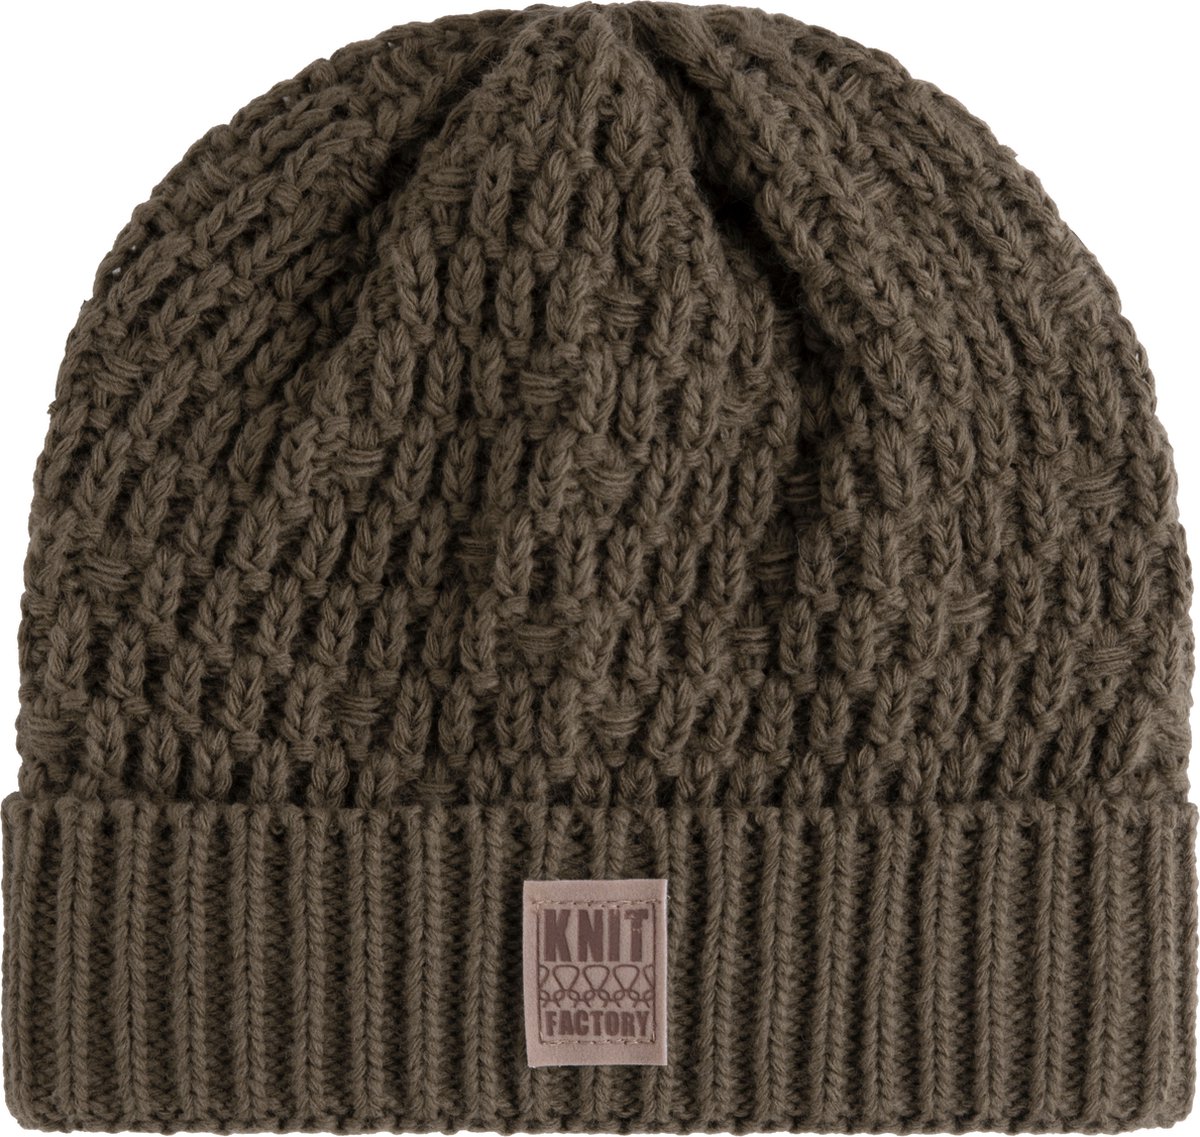 Knit Factory Jaida Gebreide Muts Heren & Dames - Beanie hat - Cappuccino - Warme bruine Wintermuts - Unisex - One Size